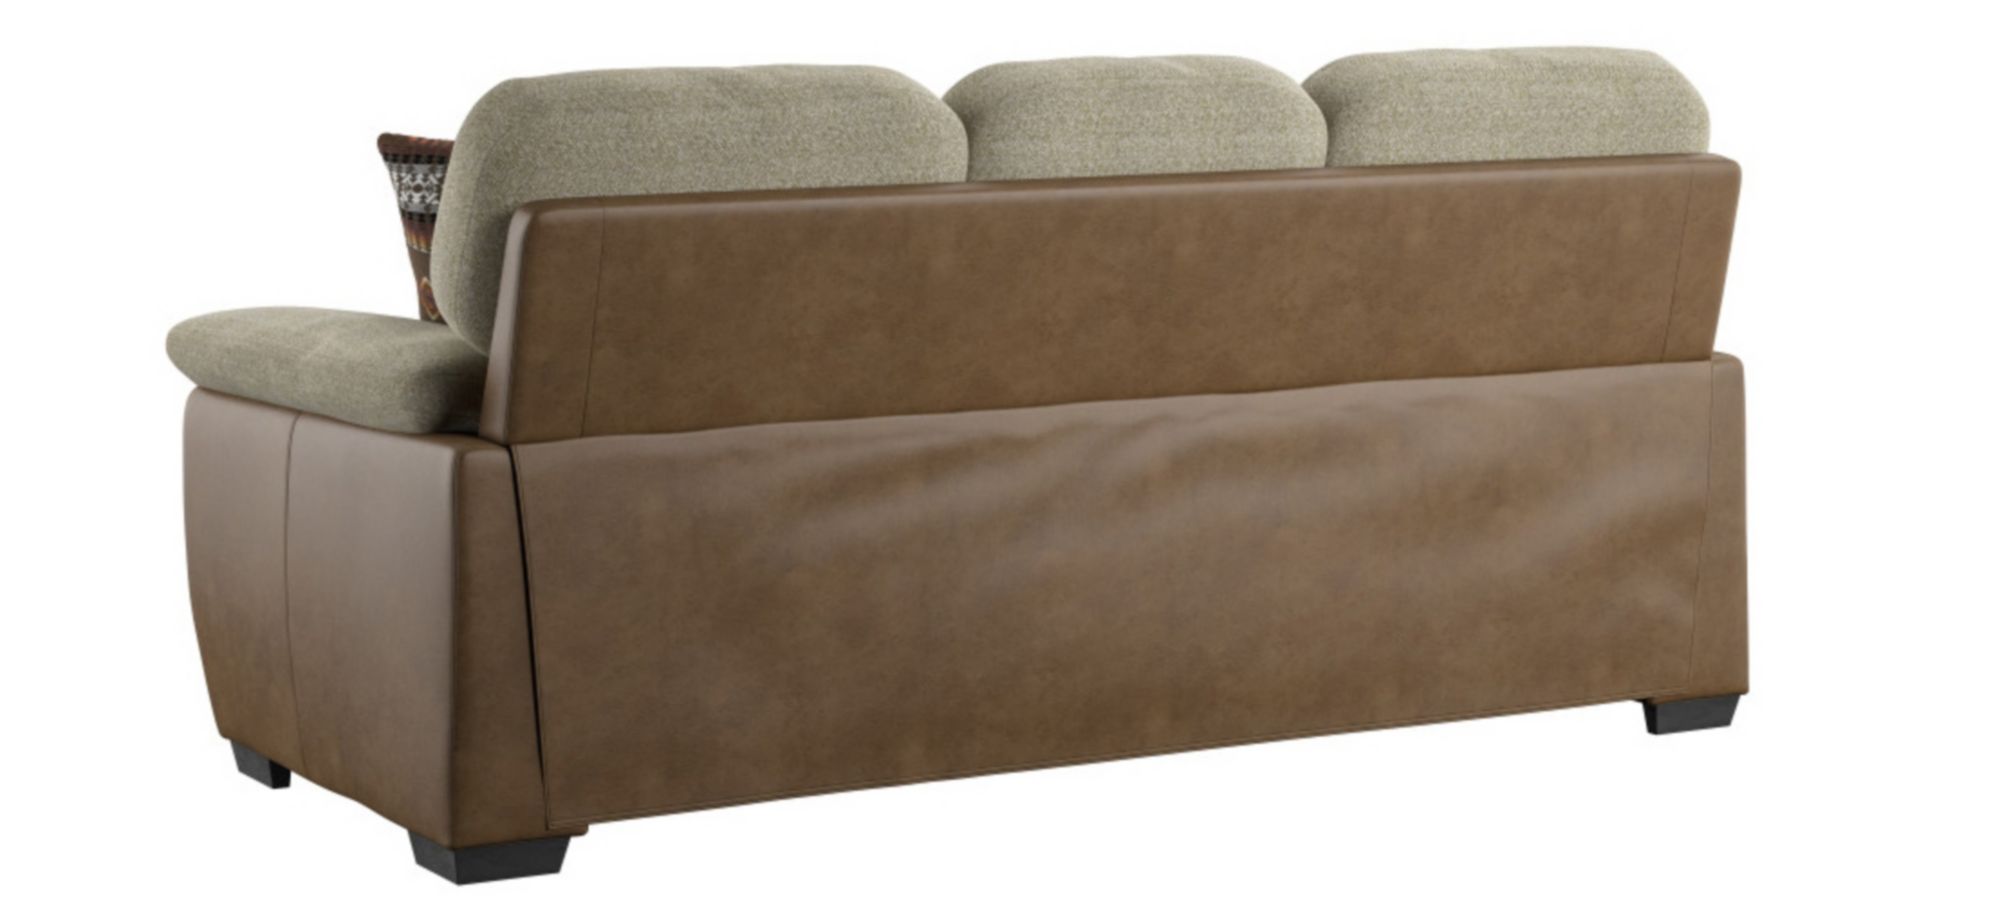 this cassio leather sofa in badlands saddle